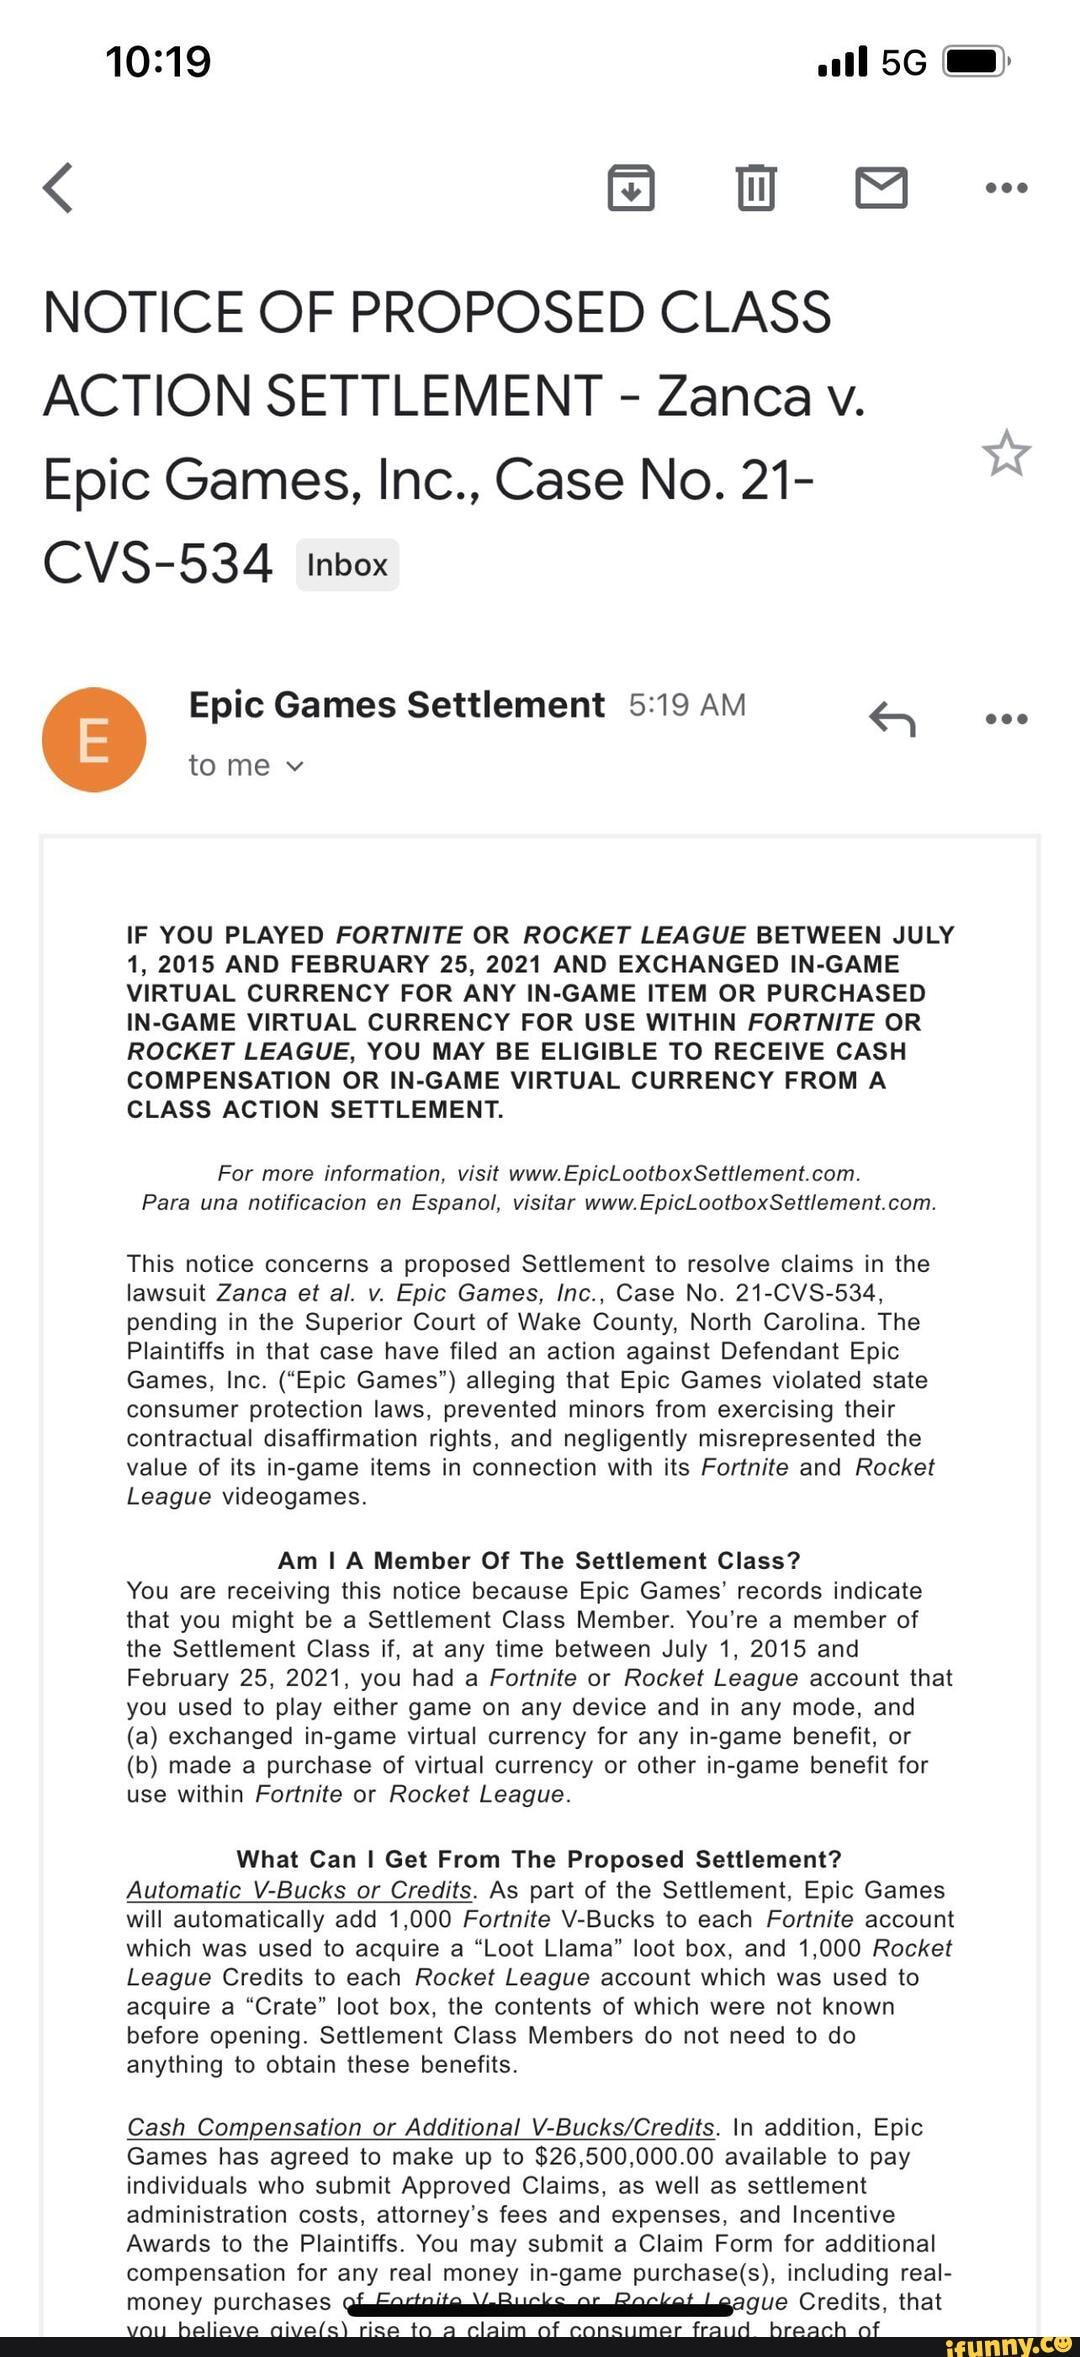 epic games settlement explained